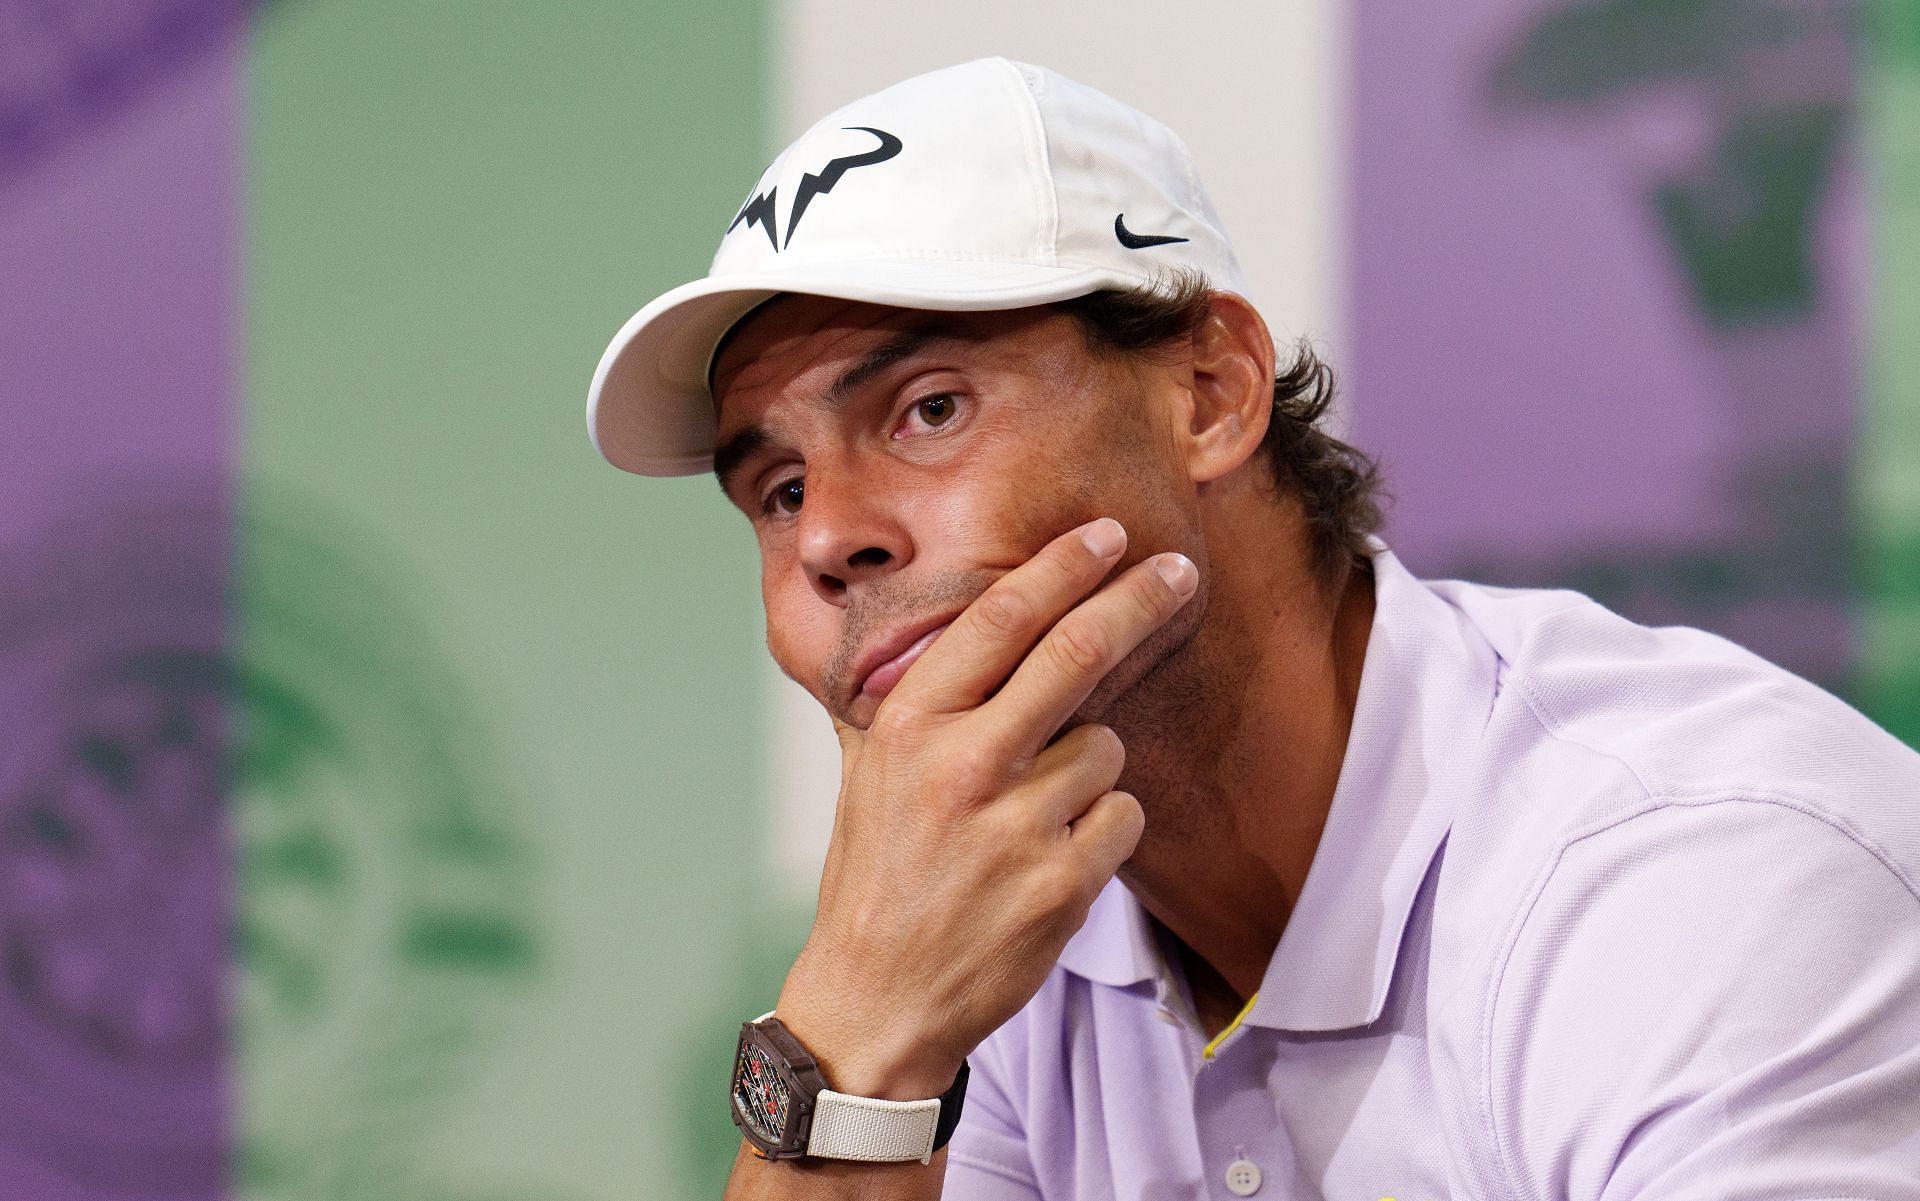 Rafael Nadal looks forward to sharing the court with Gabriela Sabatini